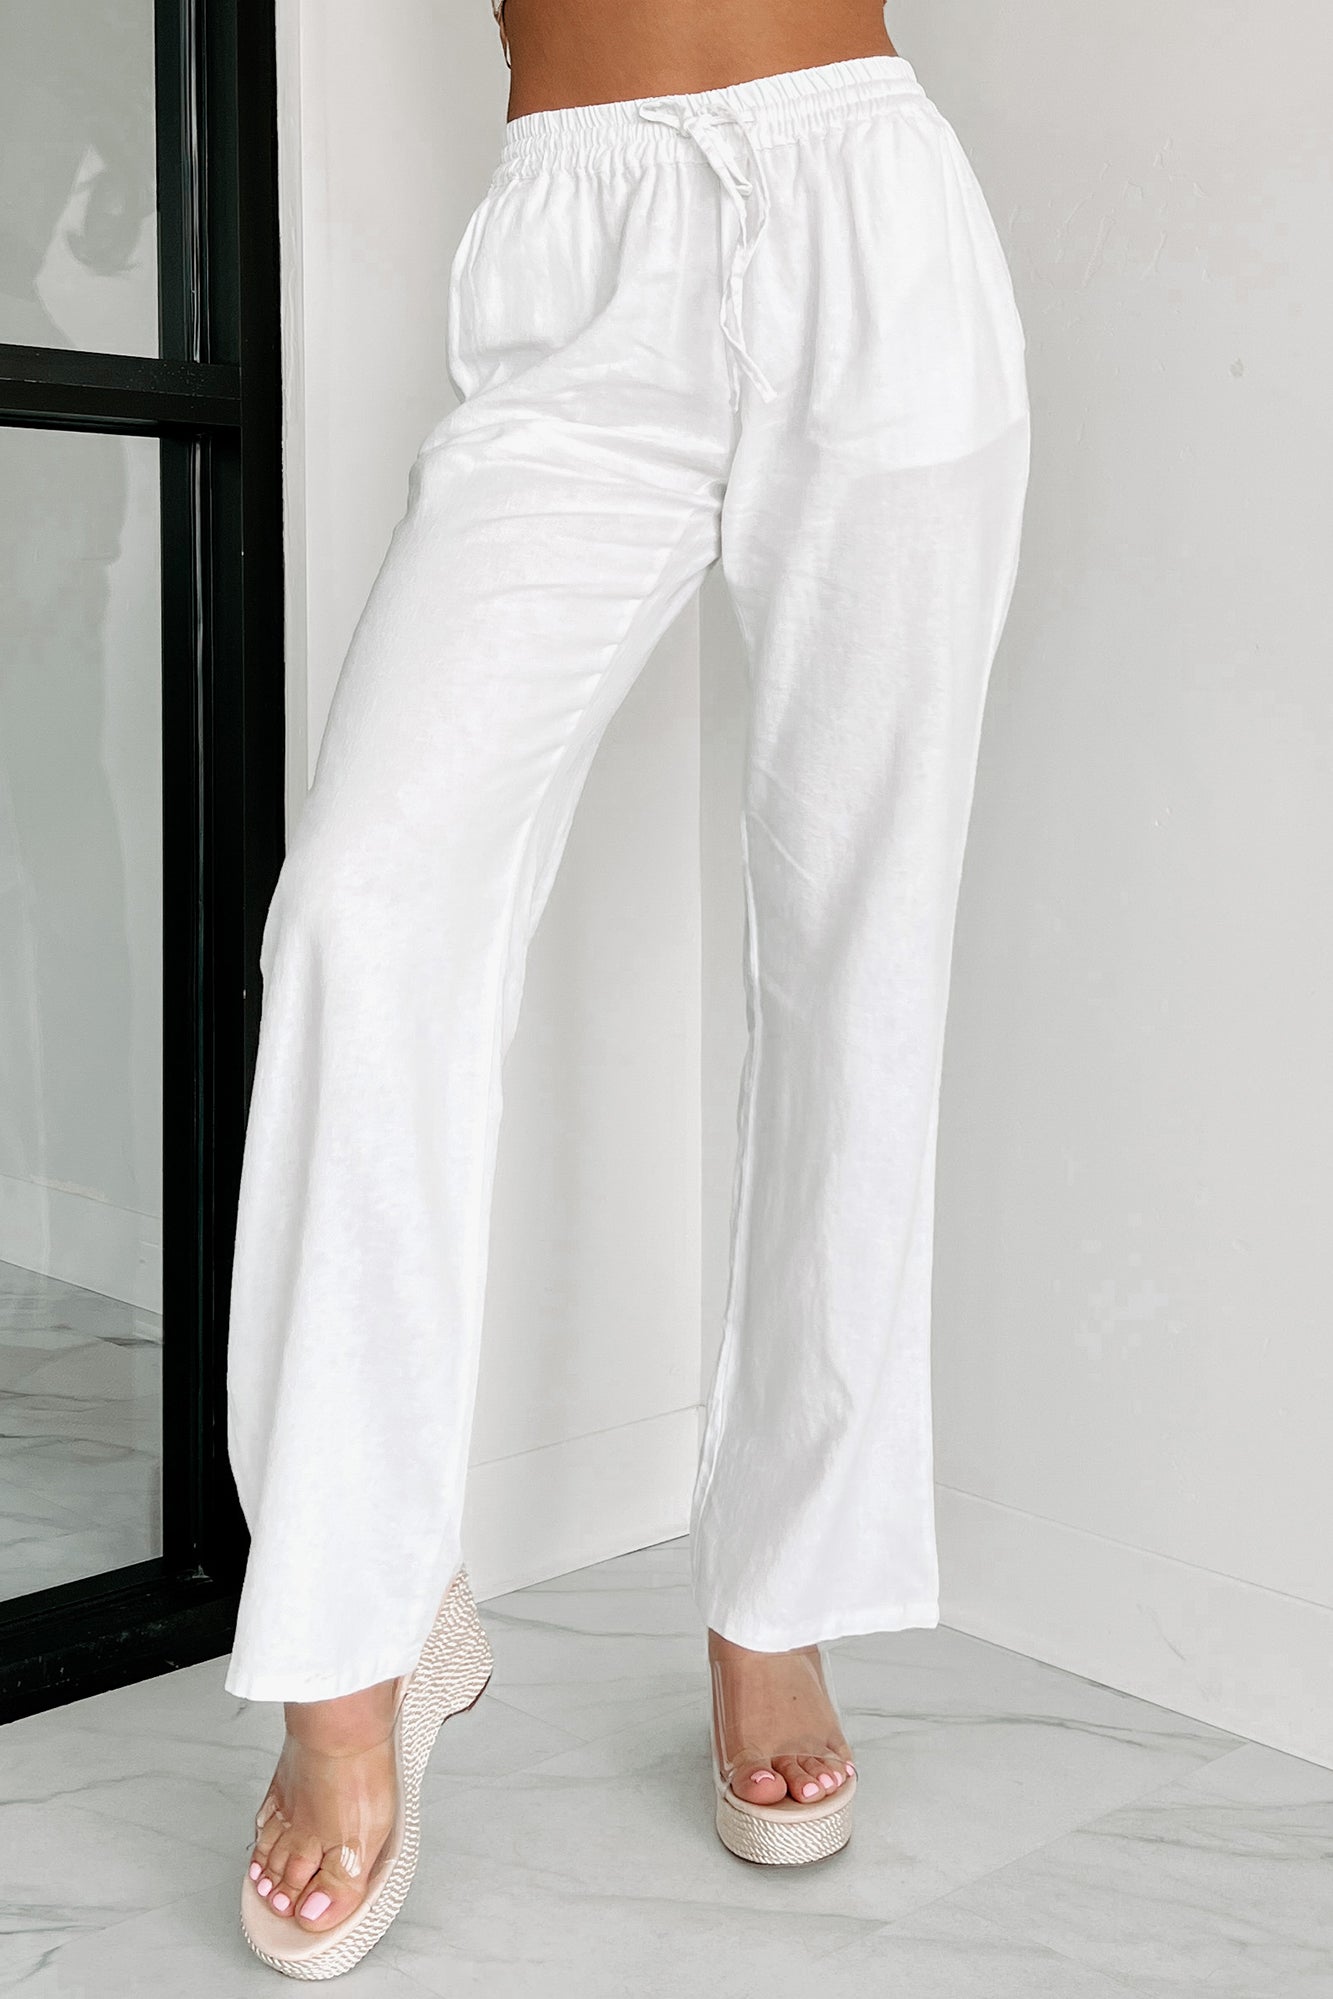 Linen loose pants / Woman's linen pants / Linen trousers / Sizes XS-2XL /  Soft linen trousers / Linen pajama Pants / White linen pants